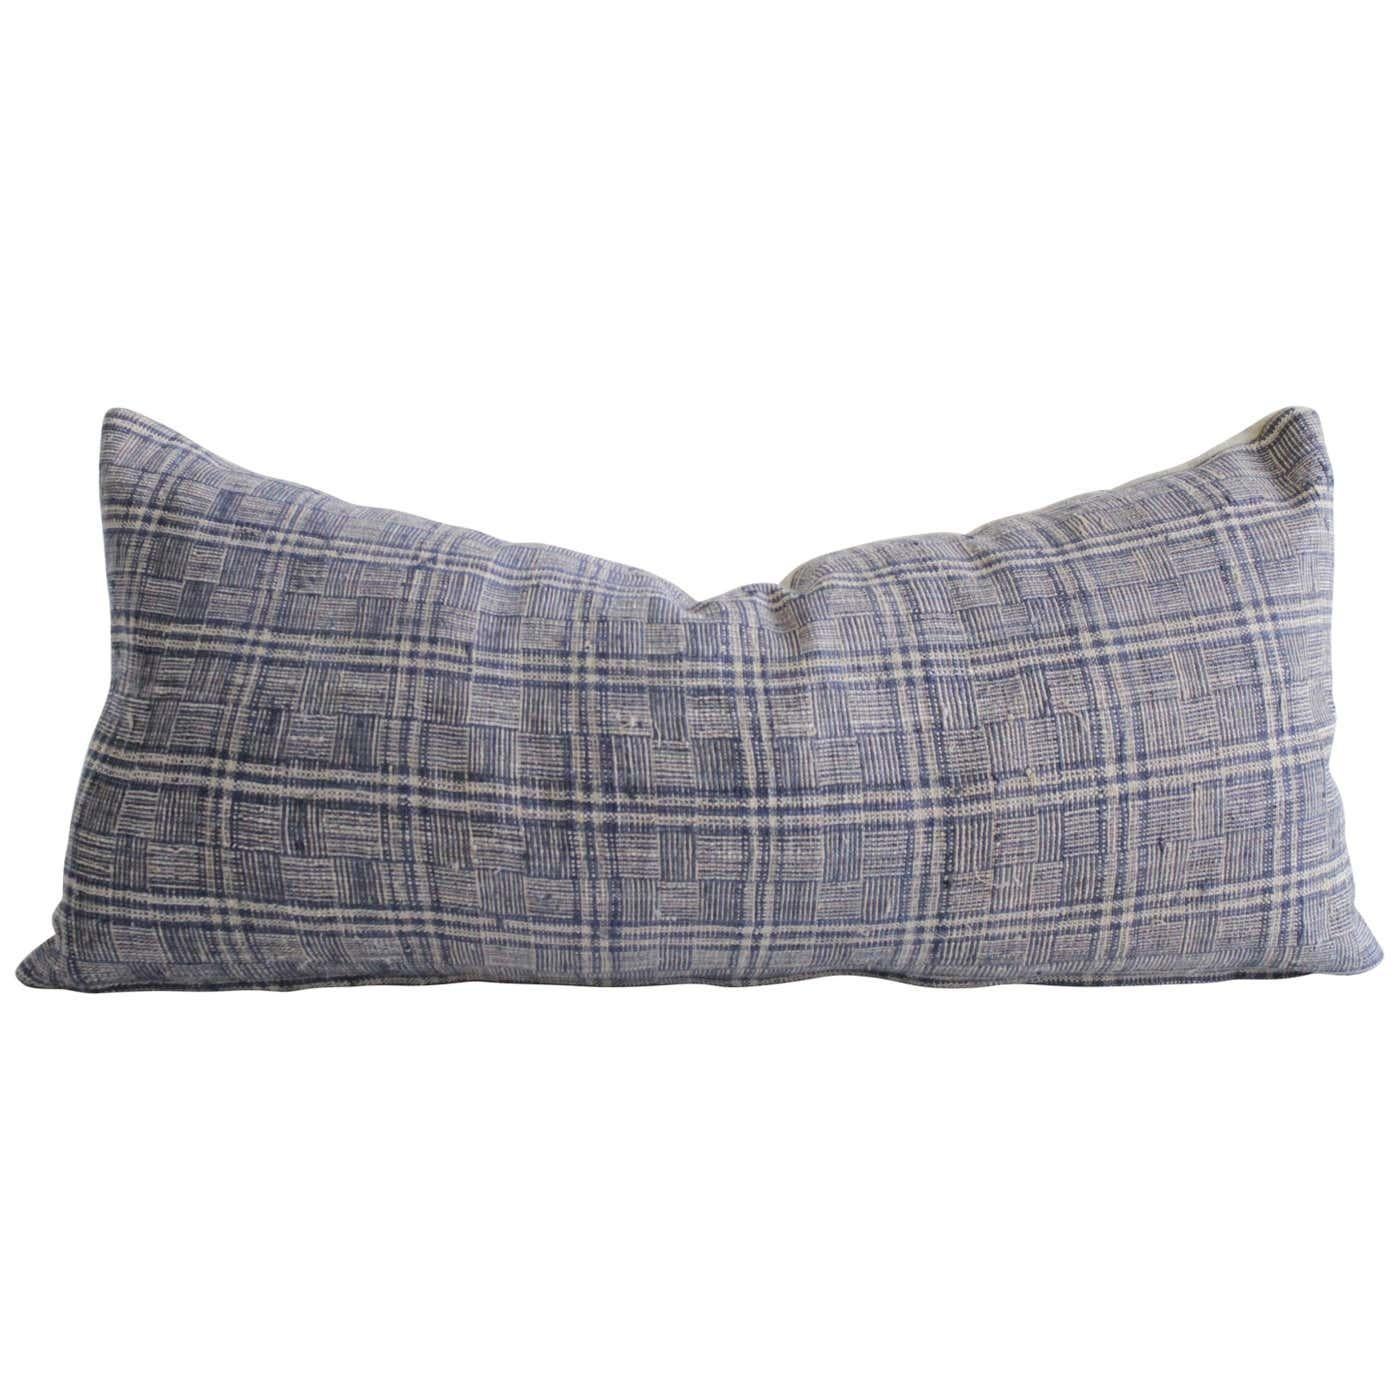 Antique Homespun Linen Lumbar Pillows Vintage Indigo and Natural Check Pattern For Sale 2